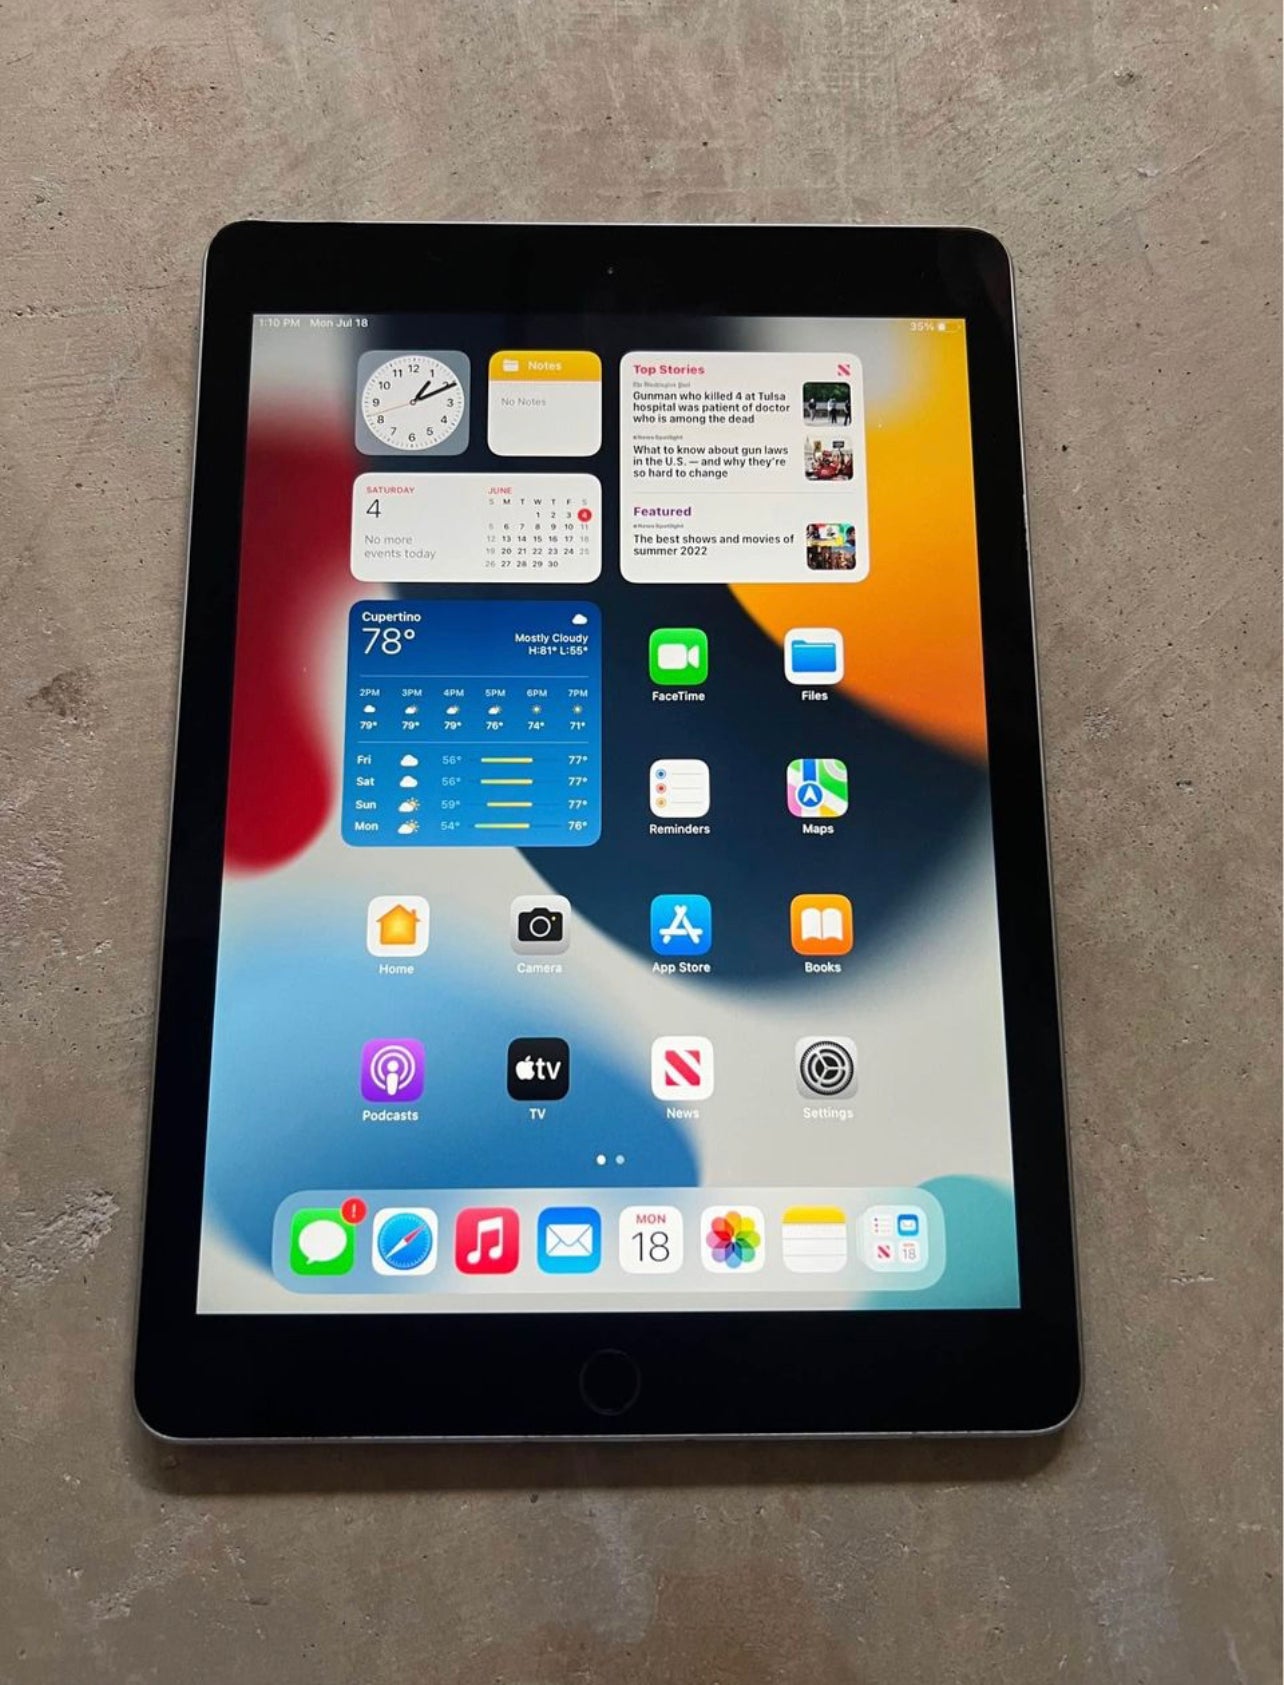 Apple iPad Air 2 16GB WiFi 9.7 Inch Tablet - Black